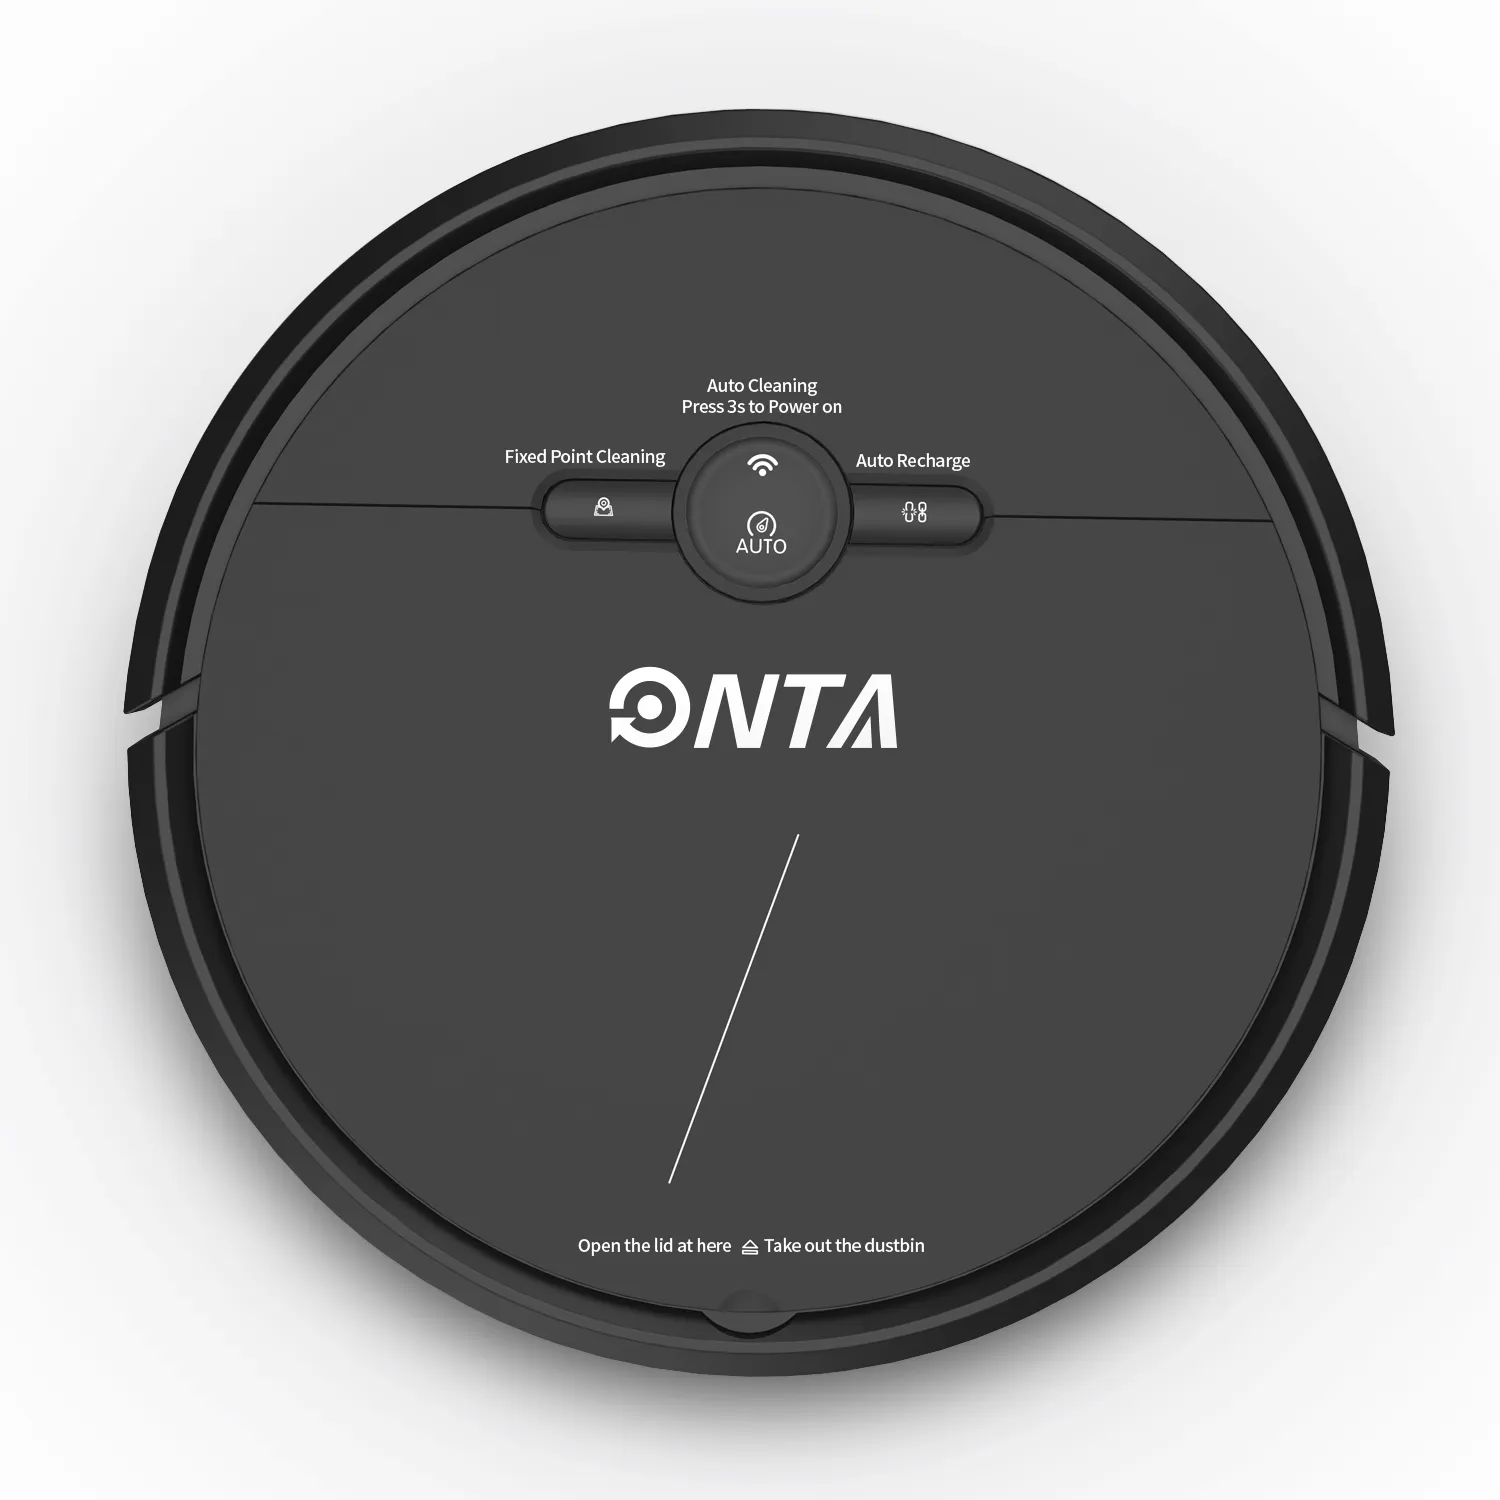 ONTA جهاز آلي لتنظيف الأتربة واي فاي متصل روبوت فراغ رسم الخرائط الذكية يعمل مع اليكسا مثالية للحيوانات الأليفة السجاد الشعر APP التحكم